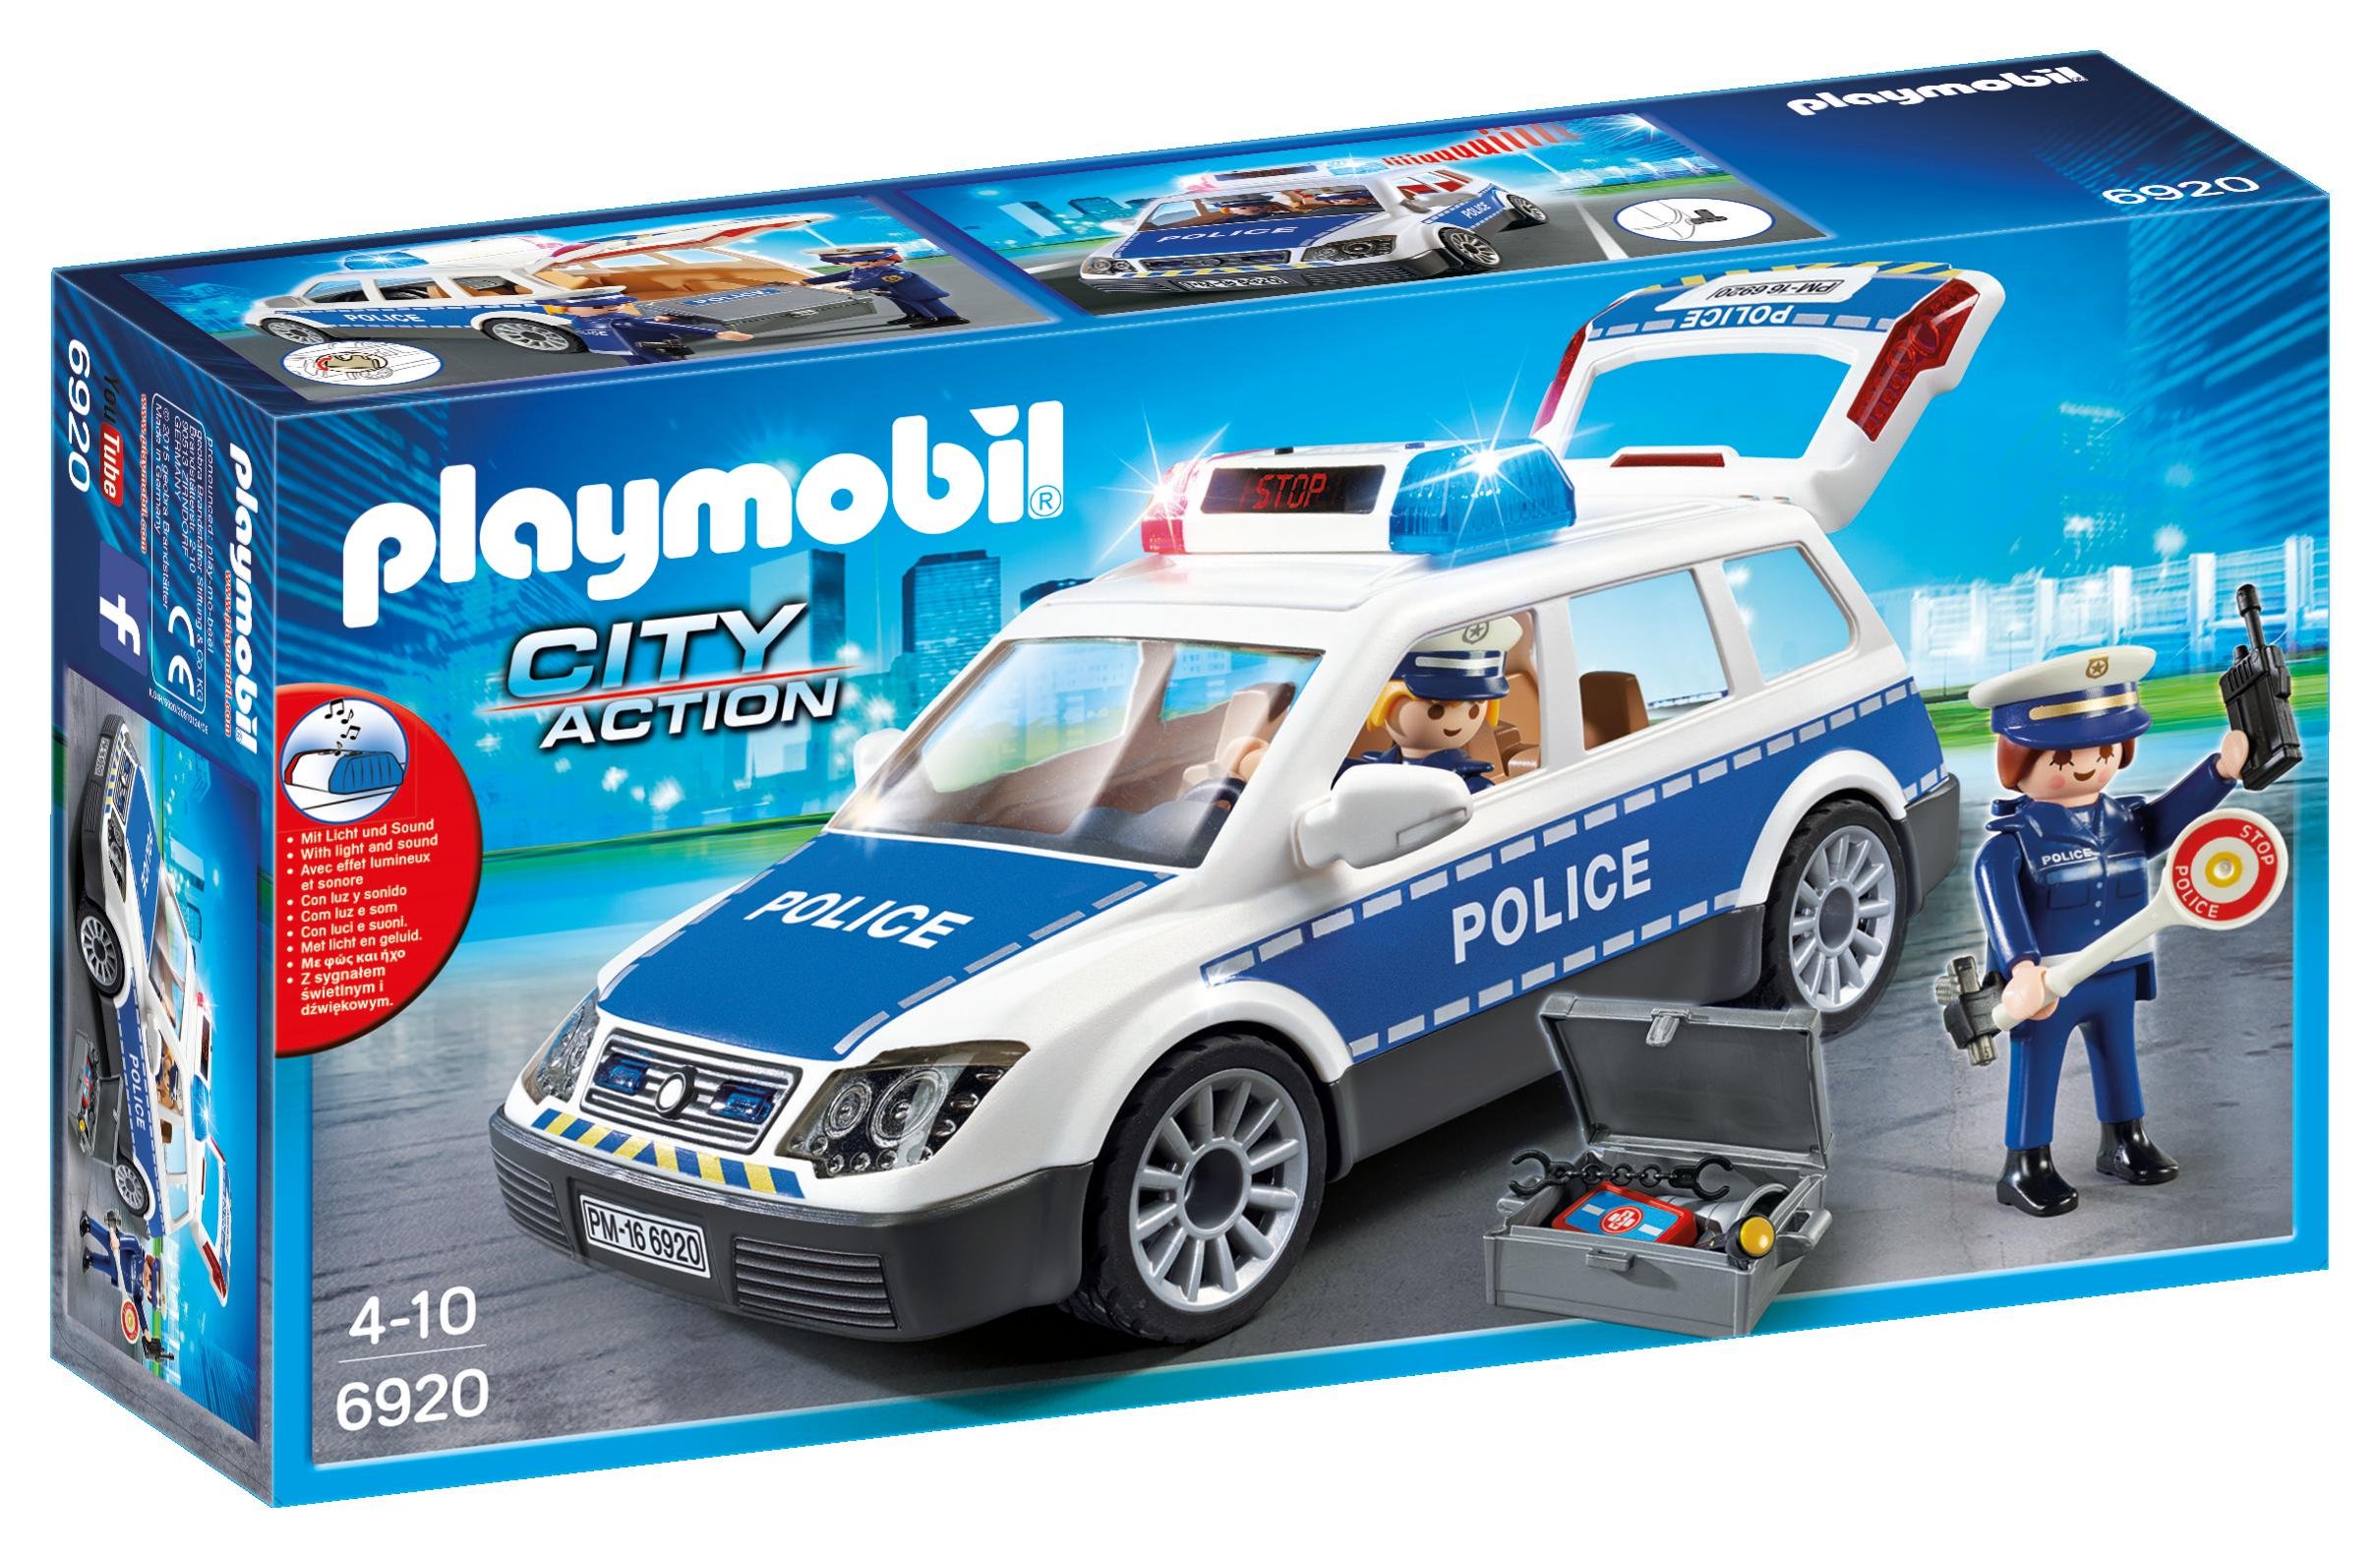 Playmobil Police Car Toy